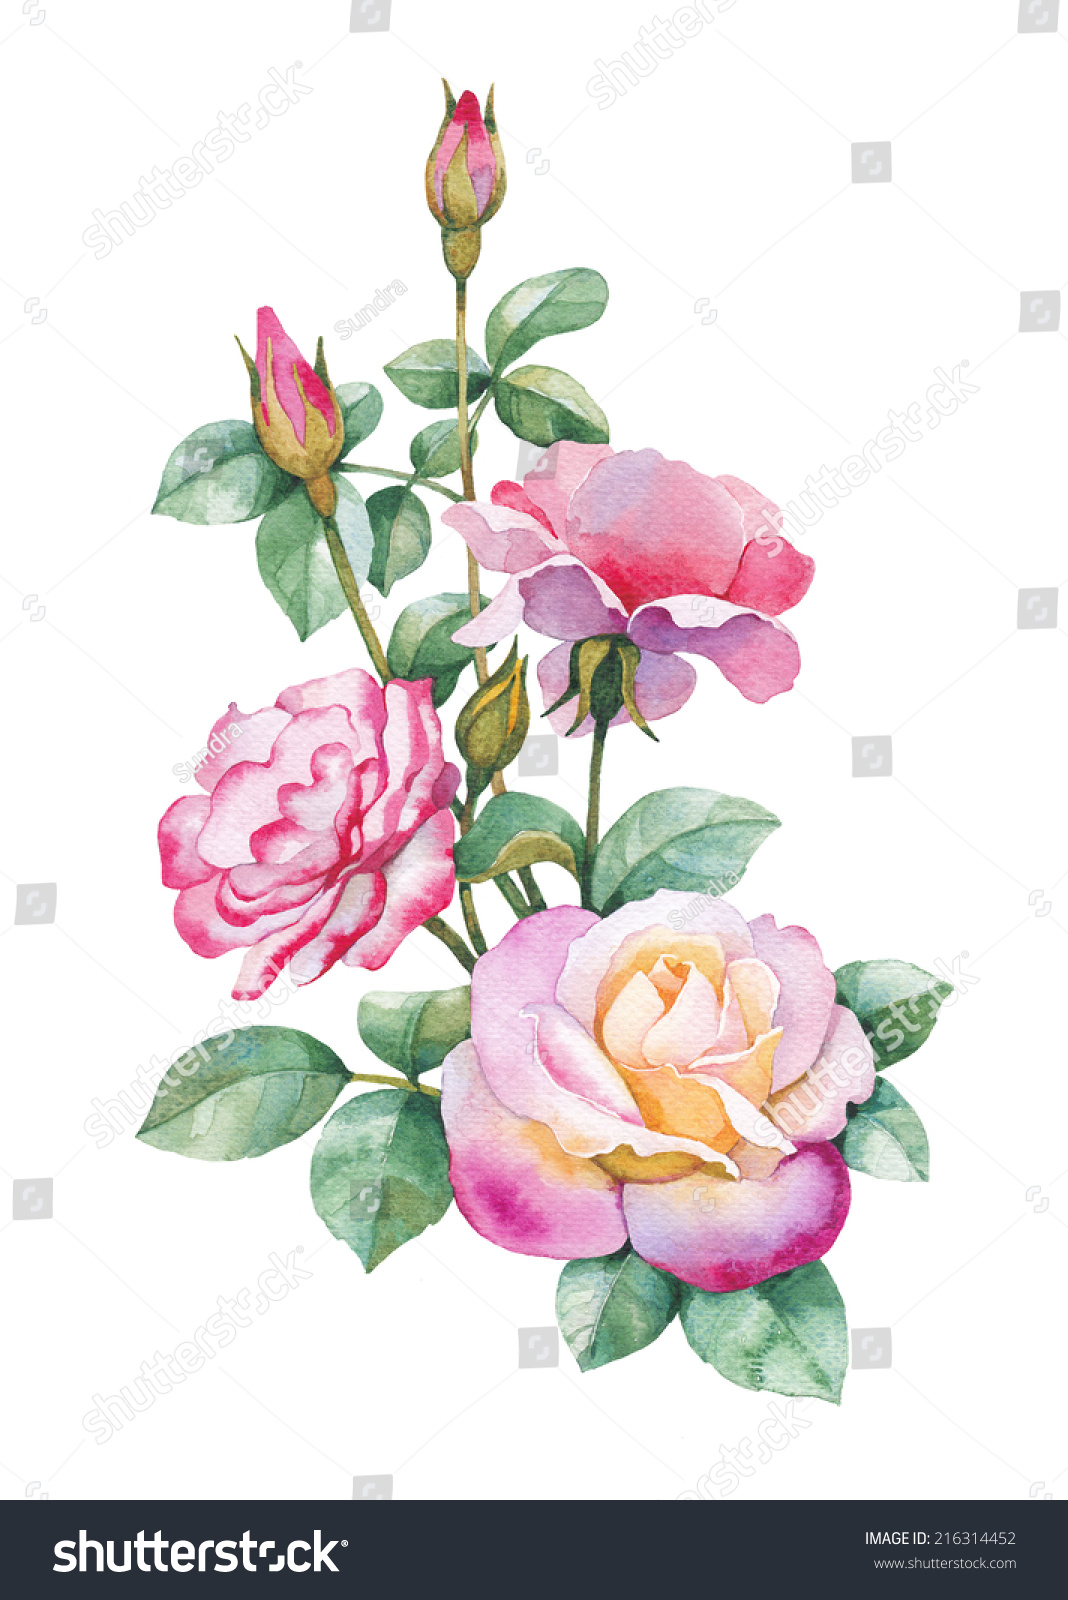 Watercolor Illustrations Rose Flowers Stock Illustration 216314452 ...